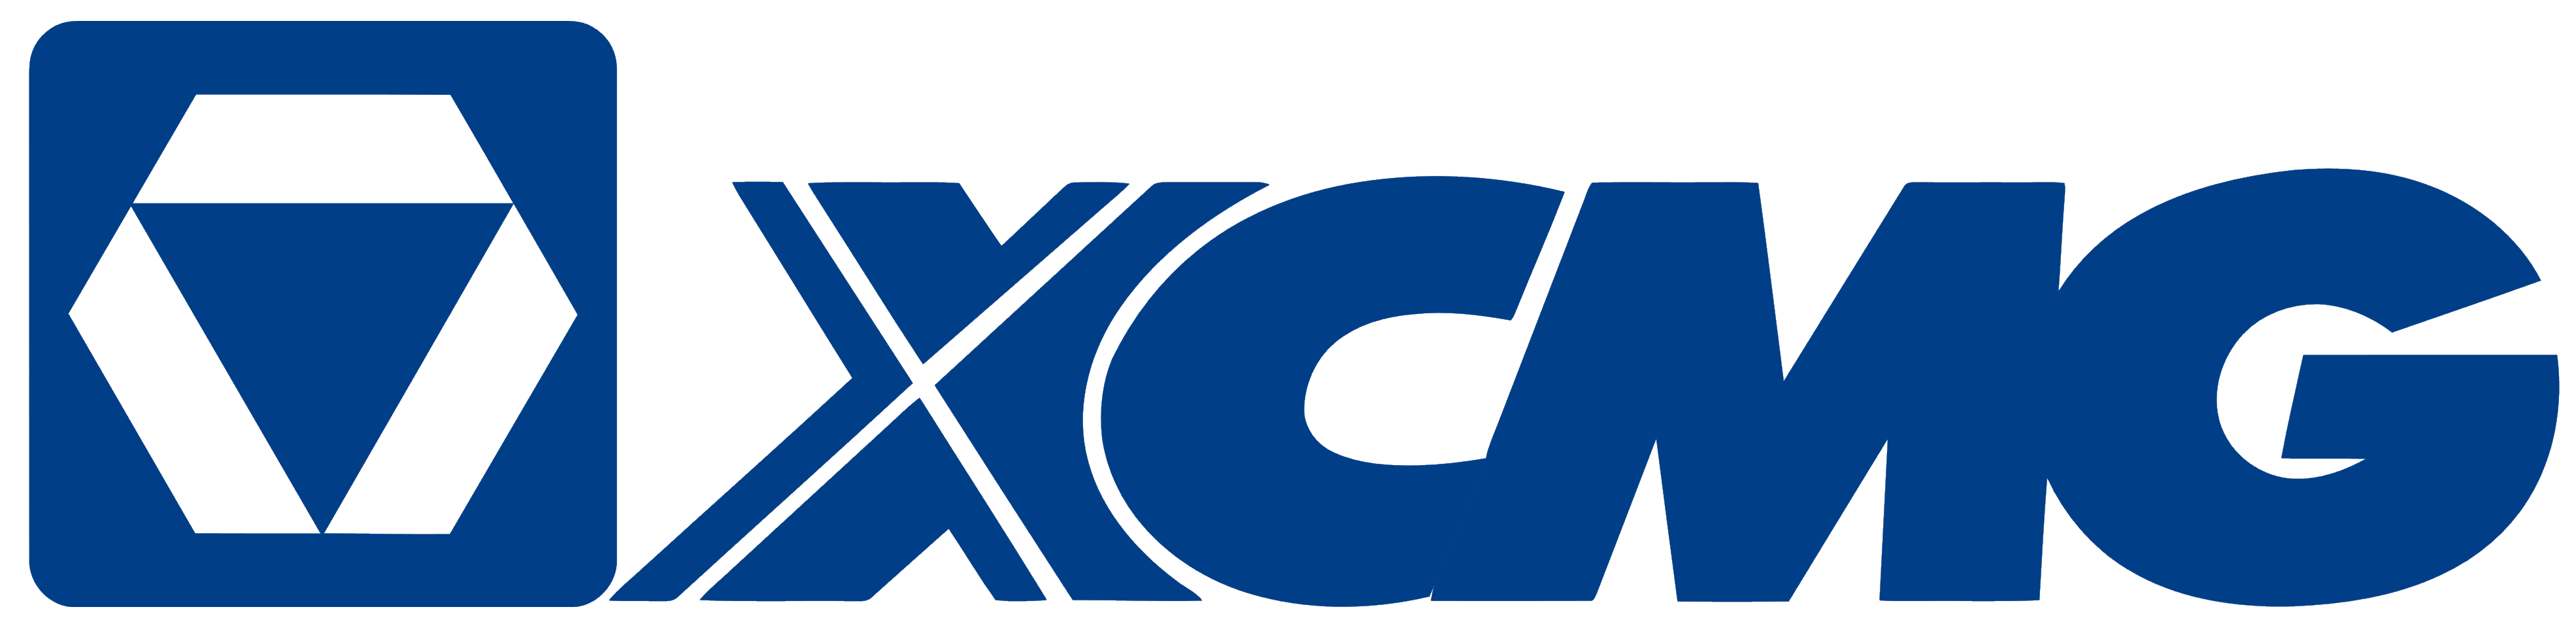 XCMG标志